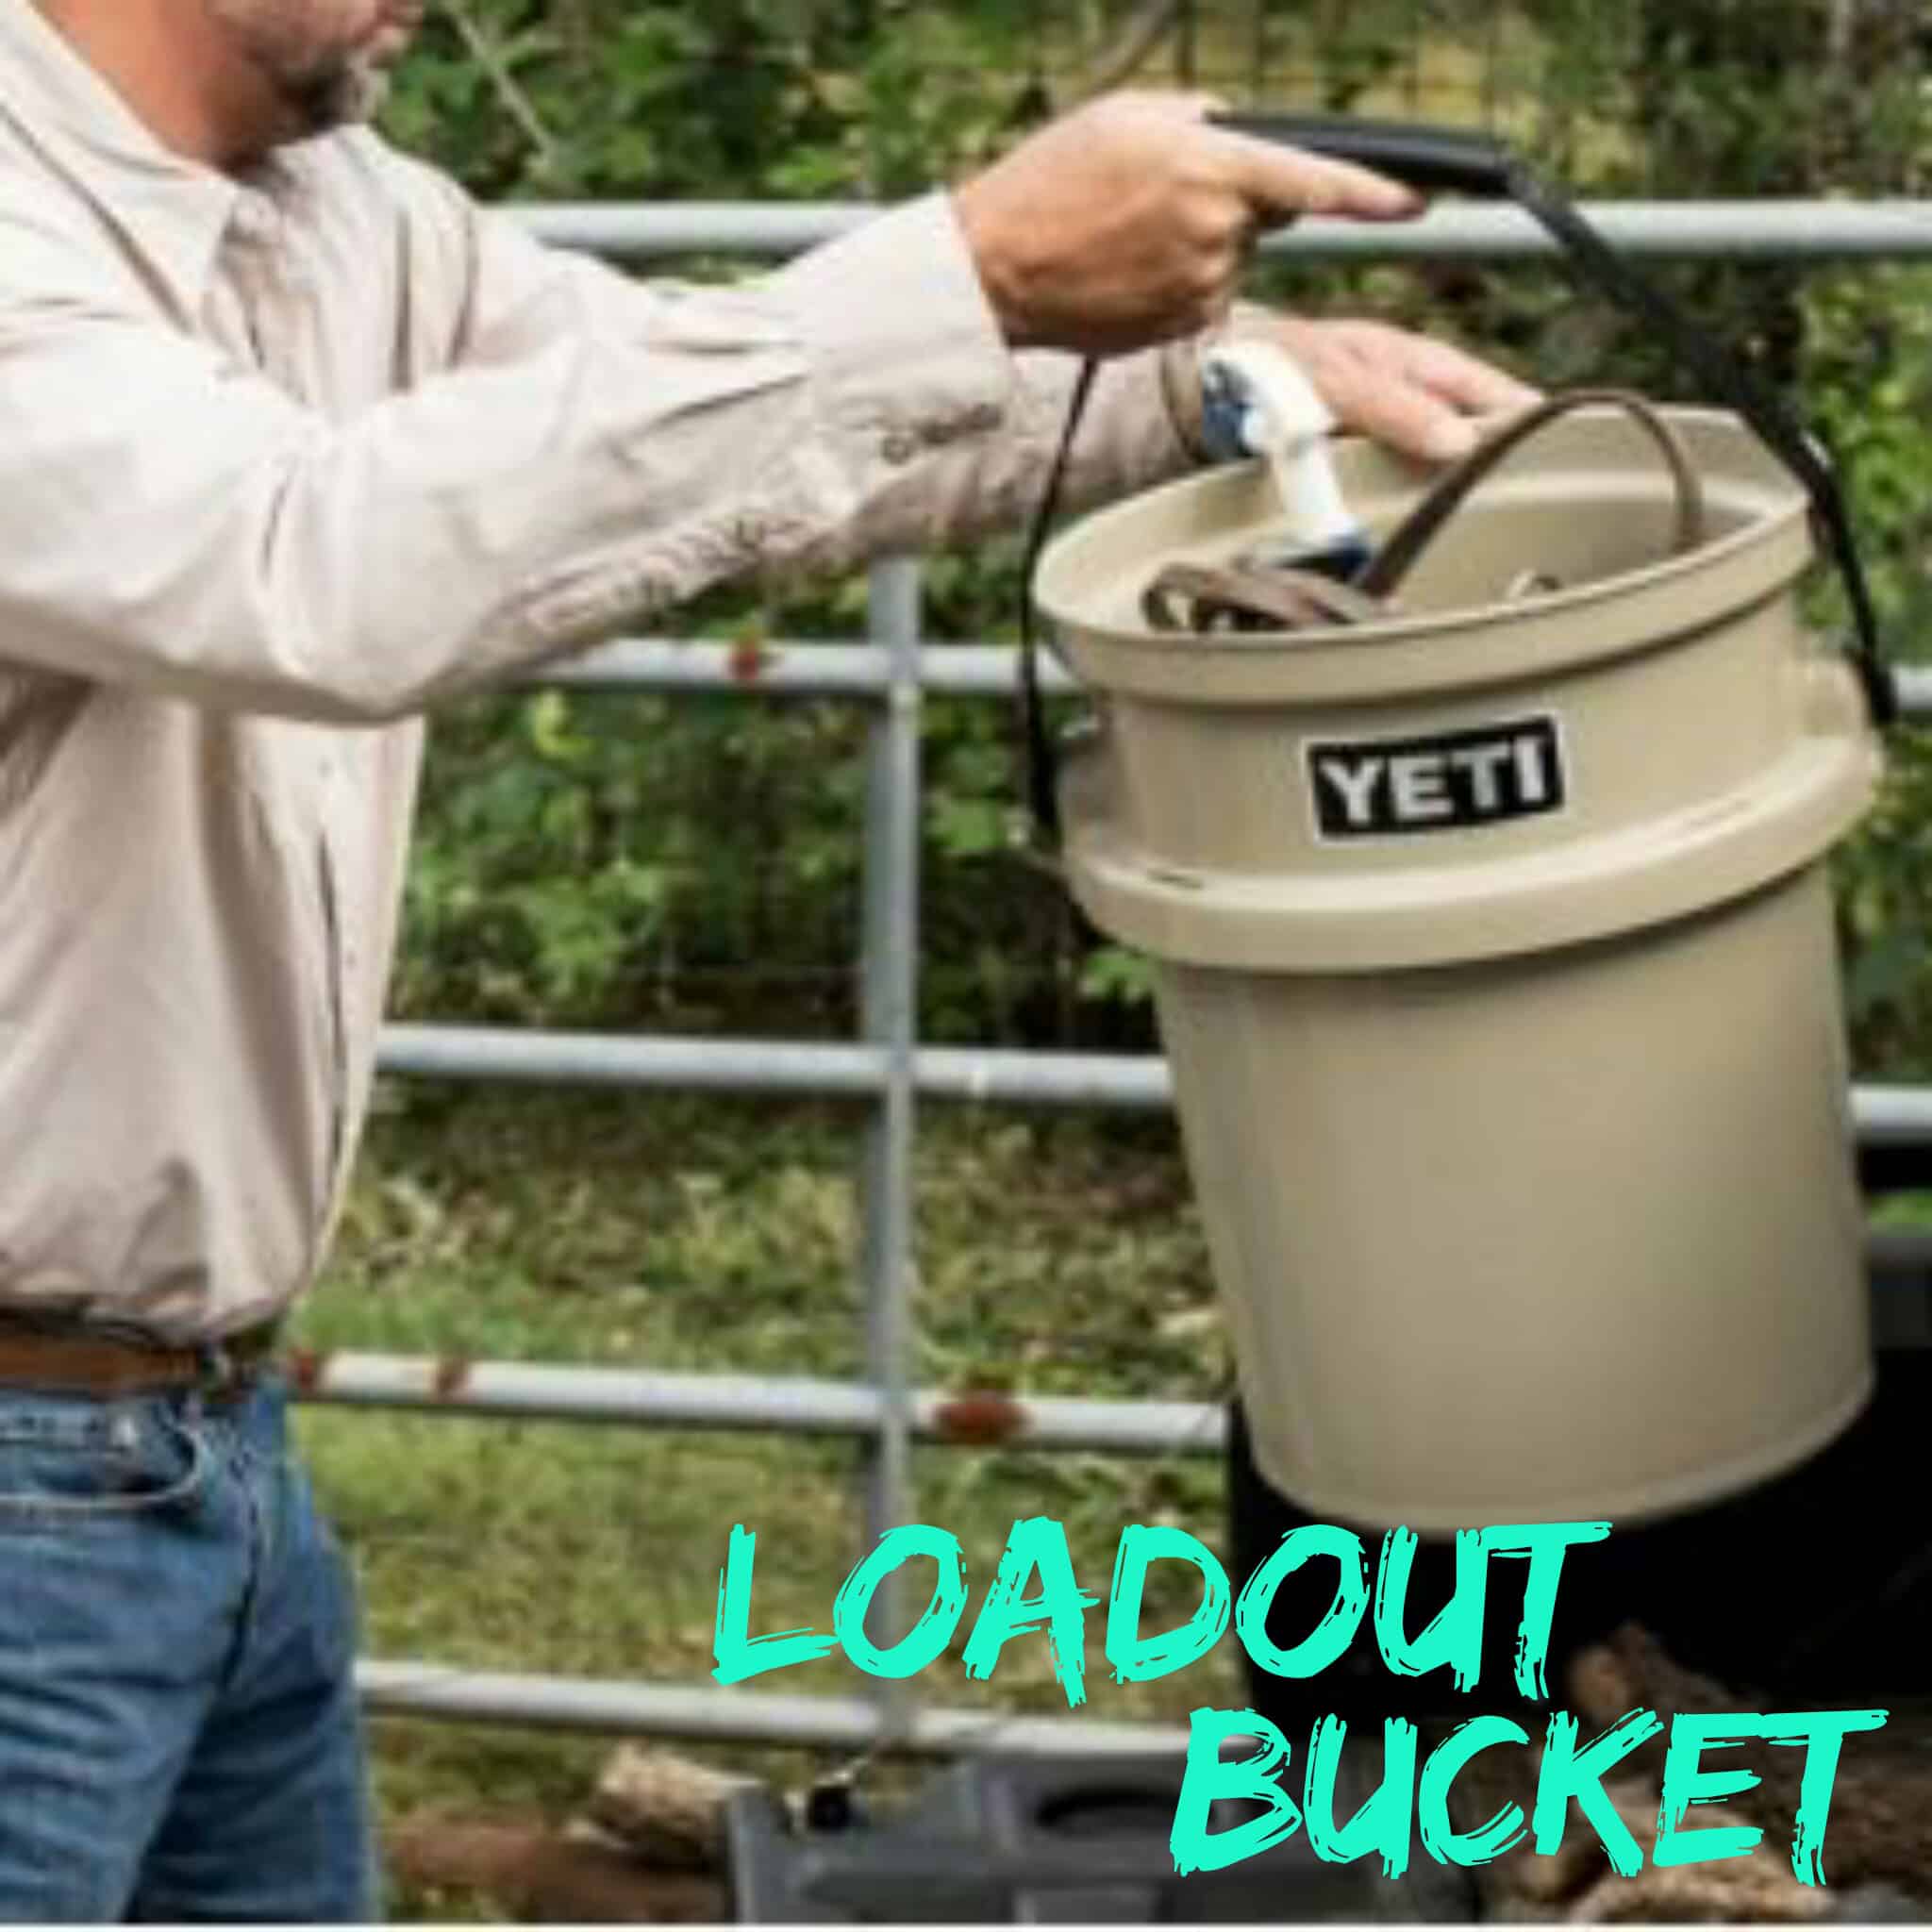 https://www.woodardmercantile.com/wp-content/uploads/2018/08/loadout-bucket-cover-pic.jpg